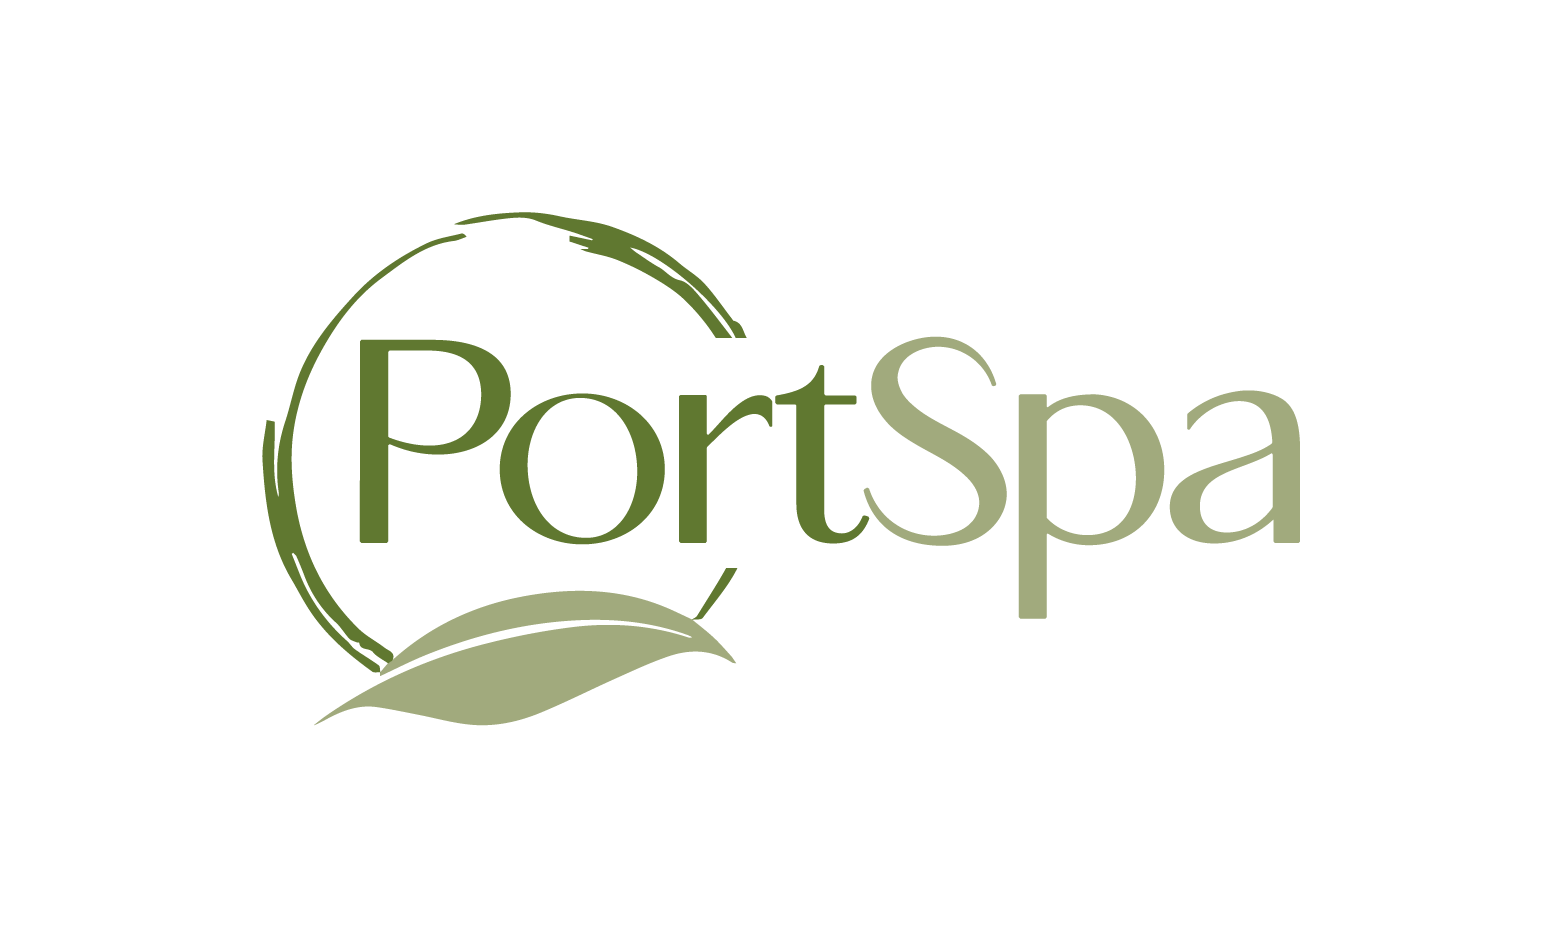 PortSpa.com - Creative brandable domain for sale